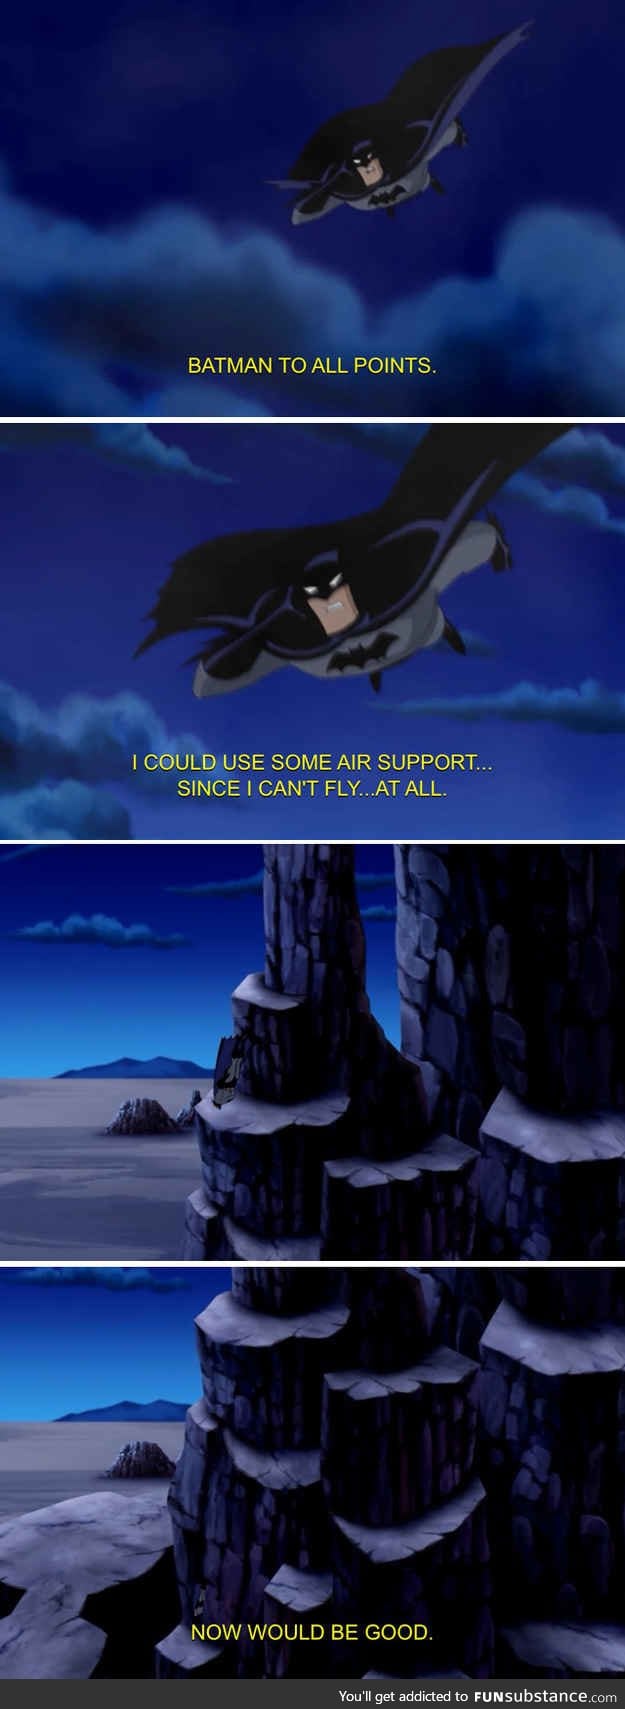 Batman can't fly